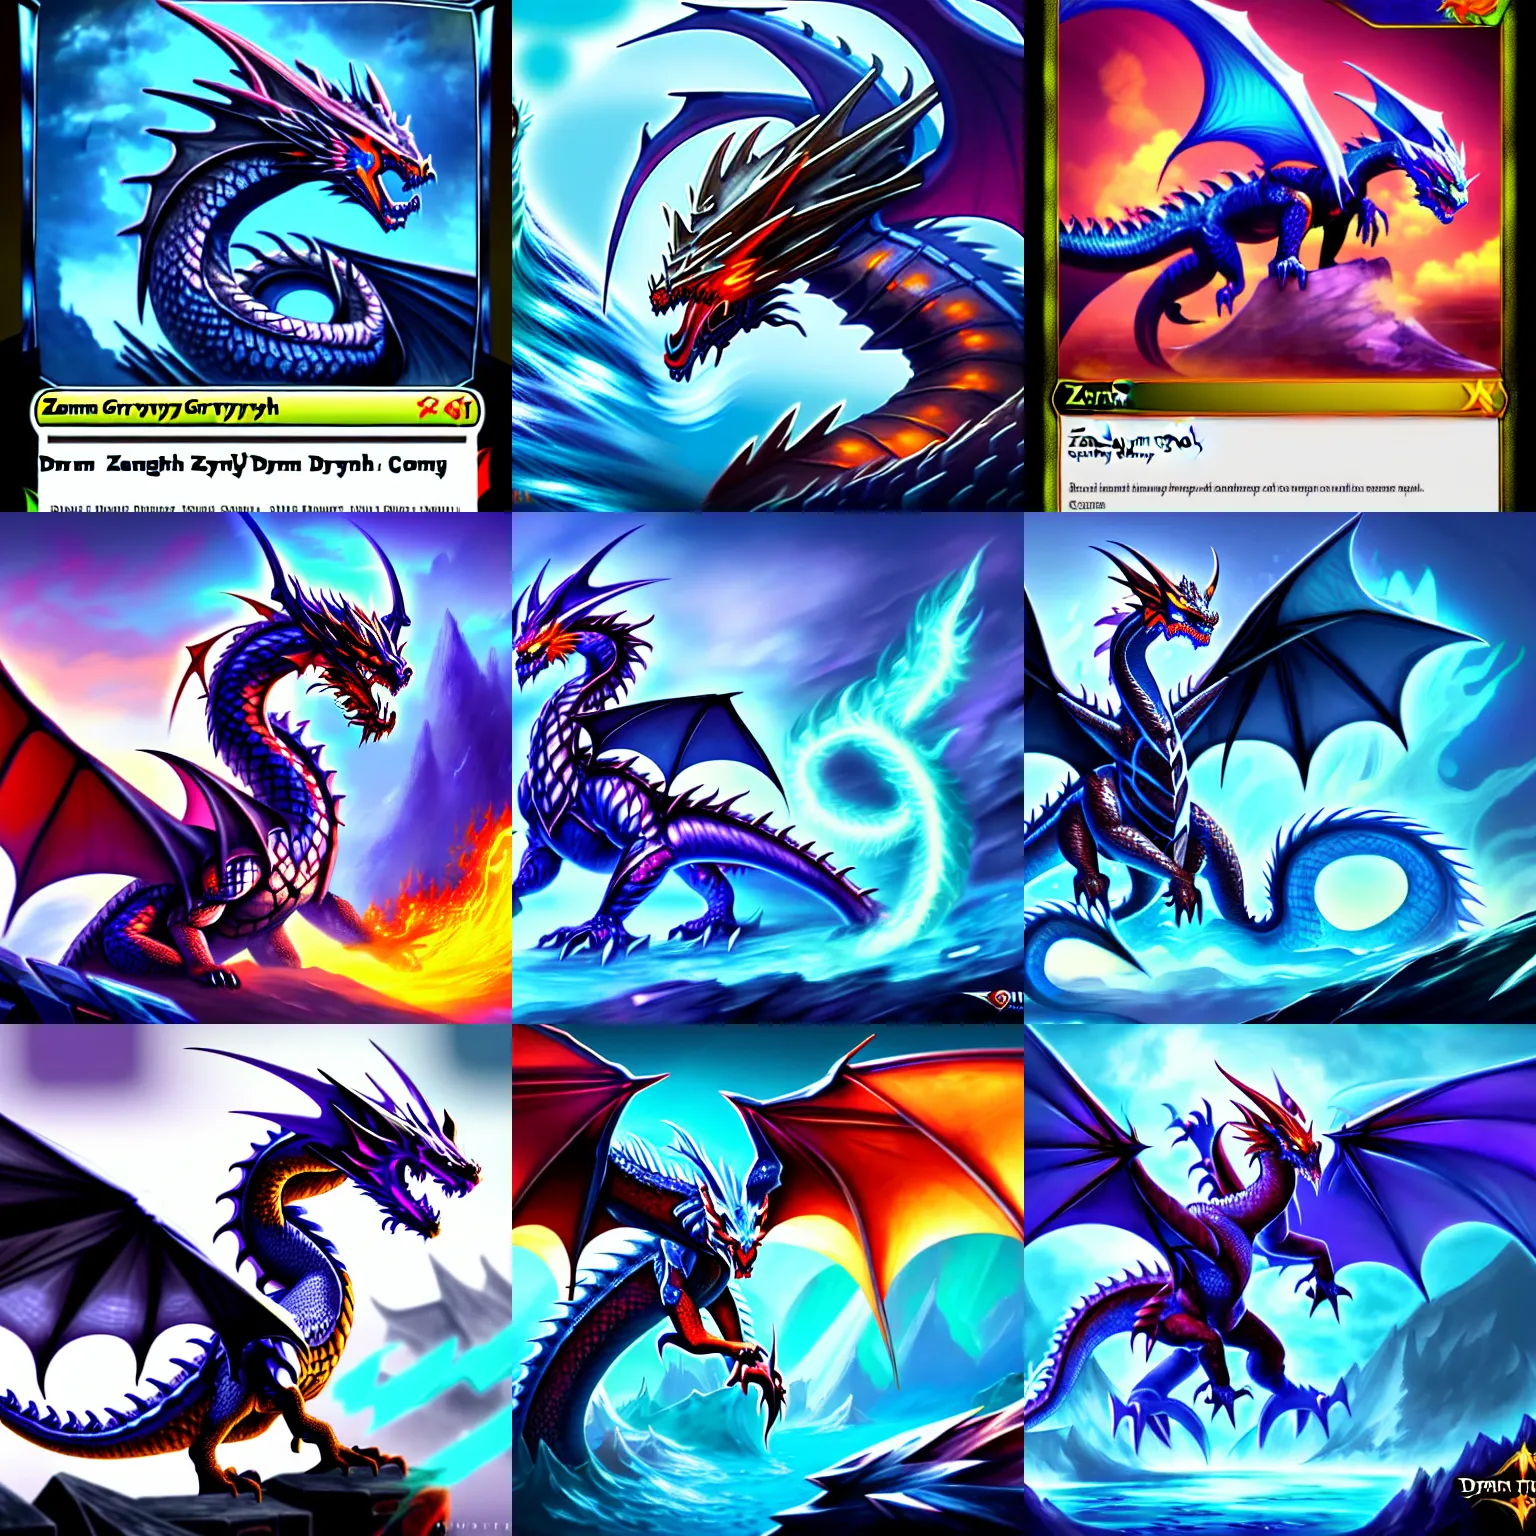 Prompt: zmei gorynych dragon, splash art